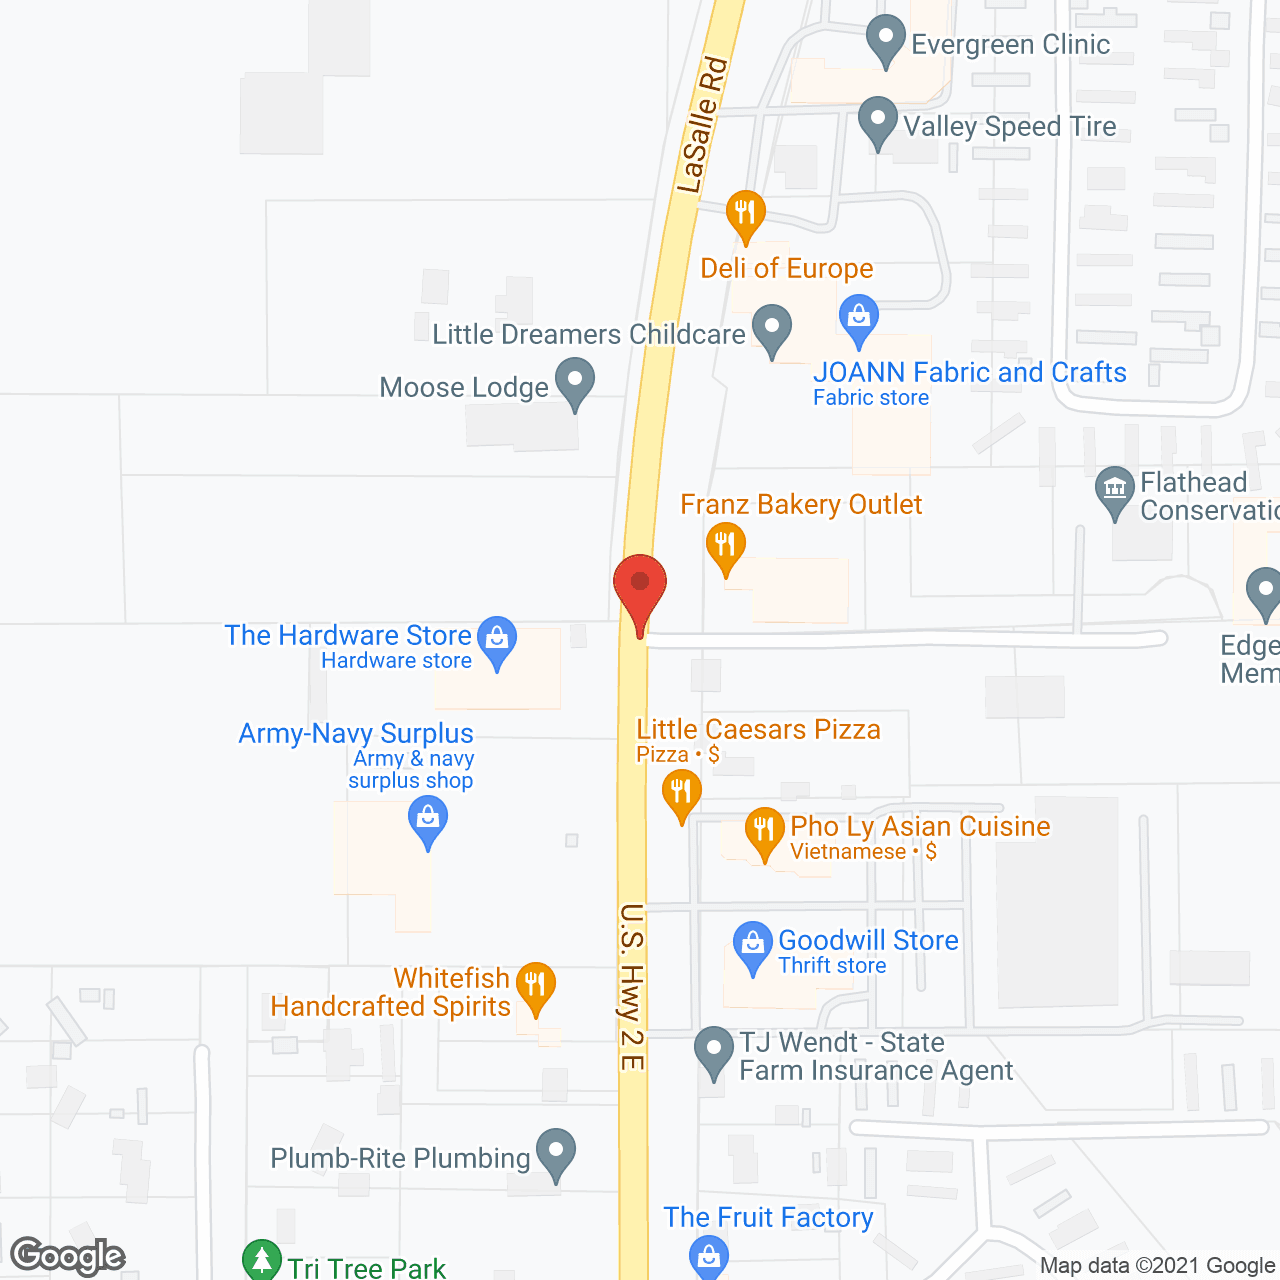 Edgewood Vista in google map